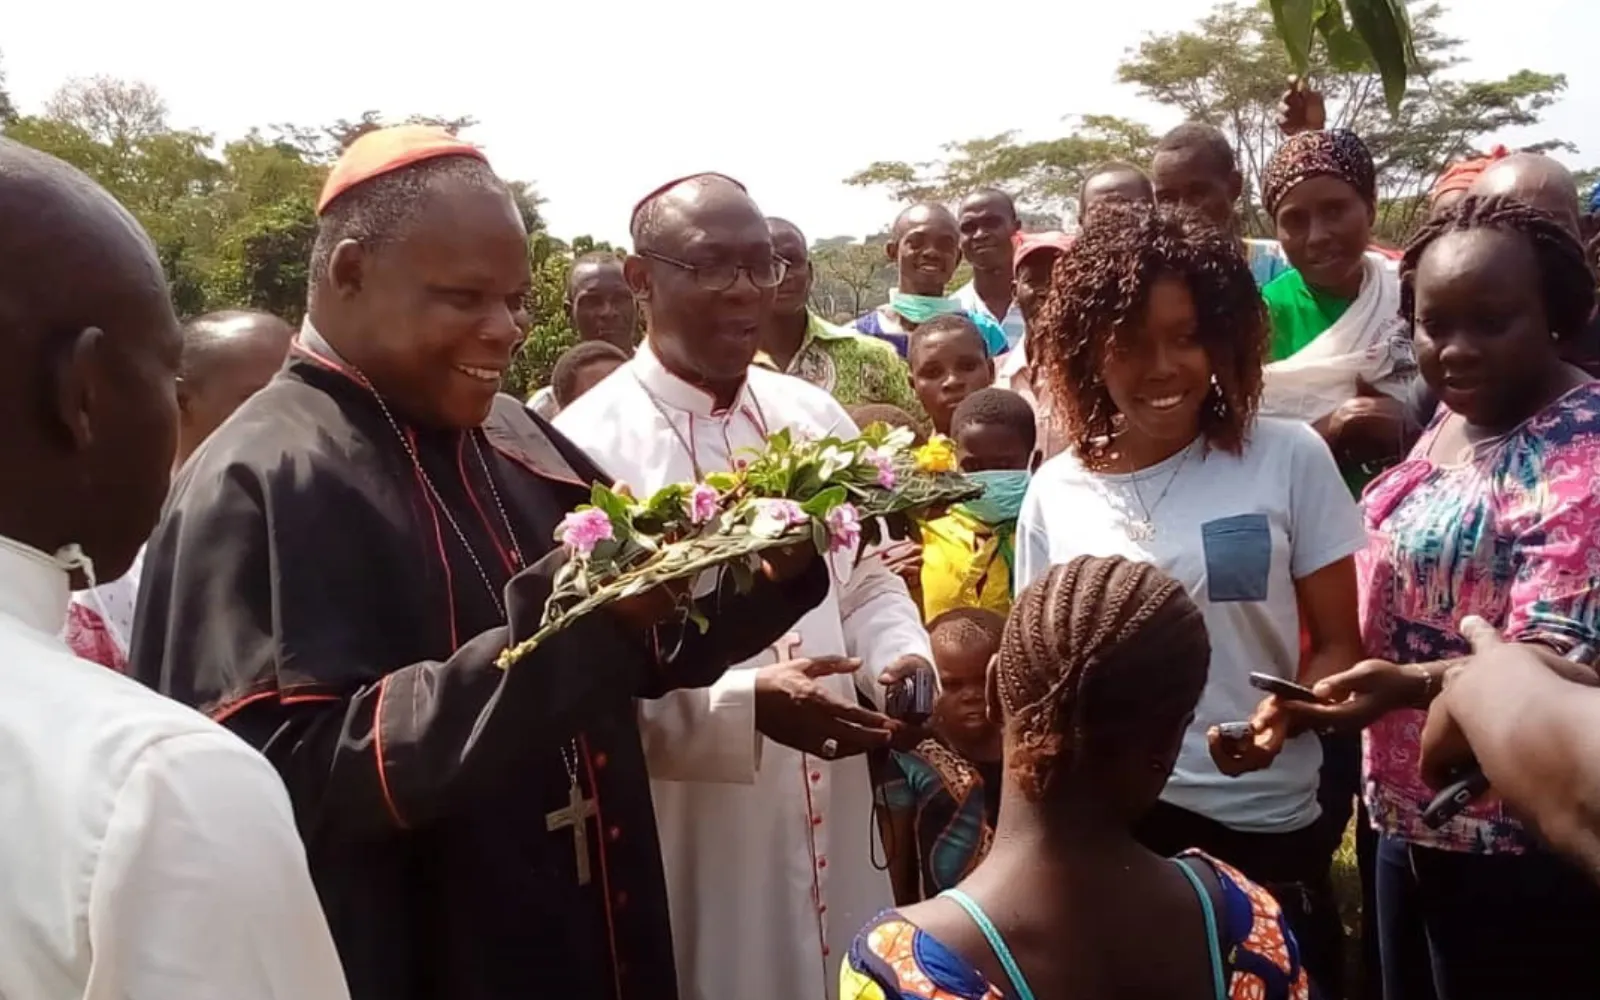 Cardenal Dieudonné Nzapalainga, Arzobispo de Bangui en la República Centroafricana?w=200&h=150